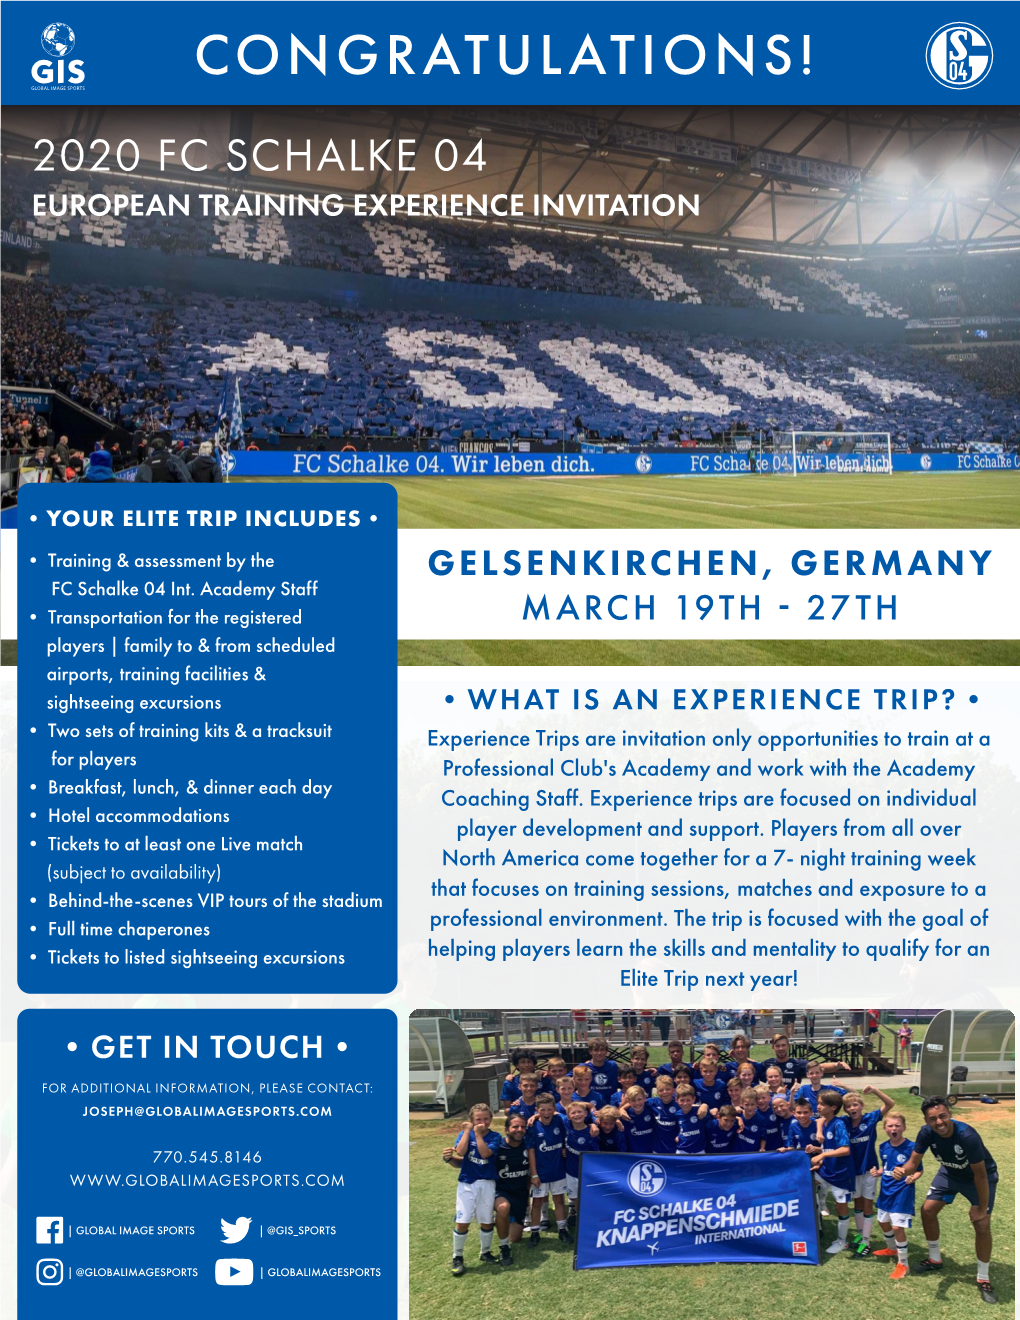 Congratulations! 2020 Fc Schalke 04 European Training Experience Invitation